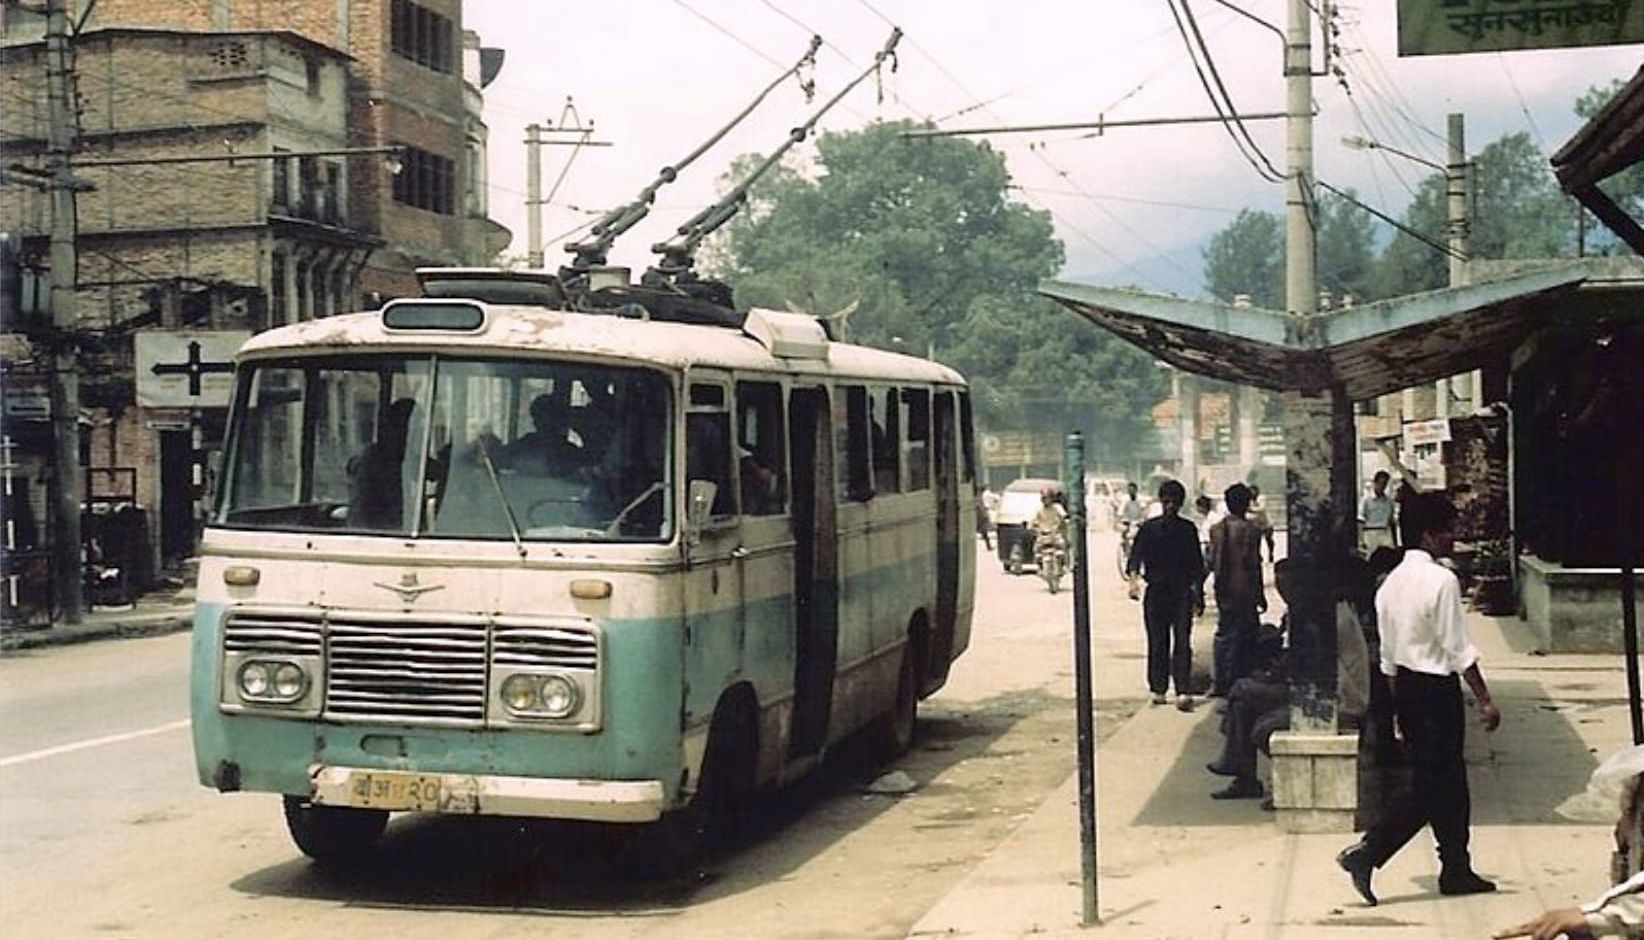 Trolleybus in Kathmandu City